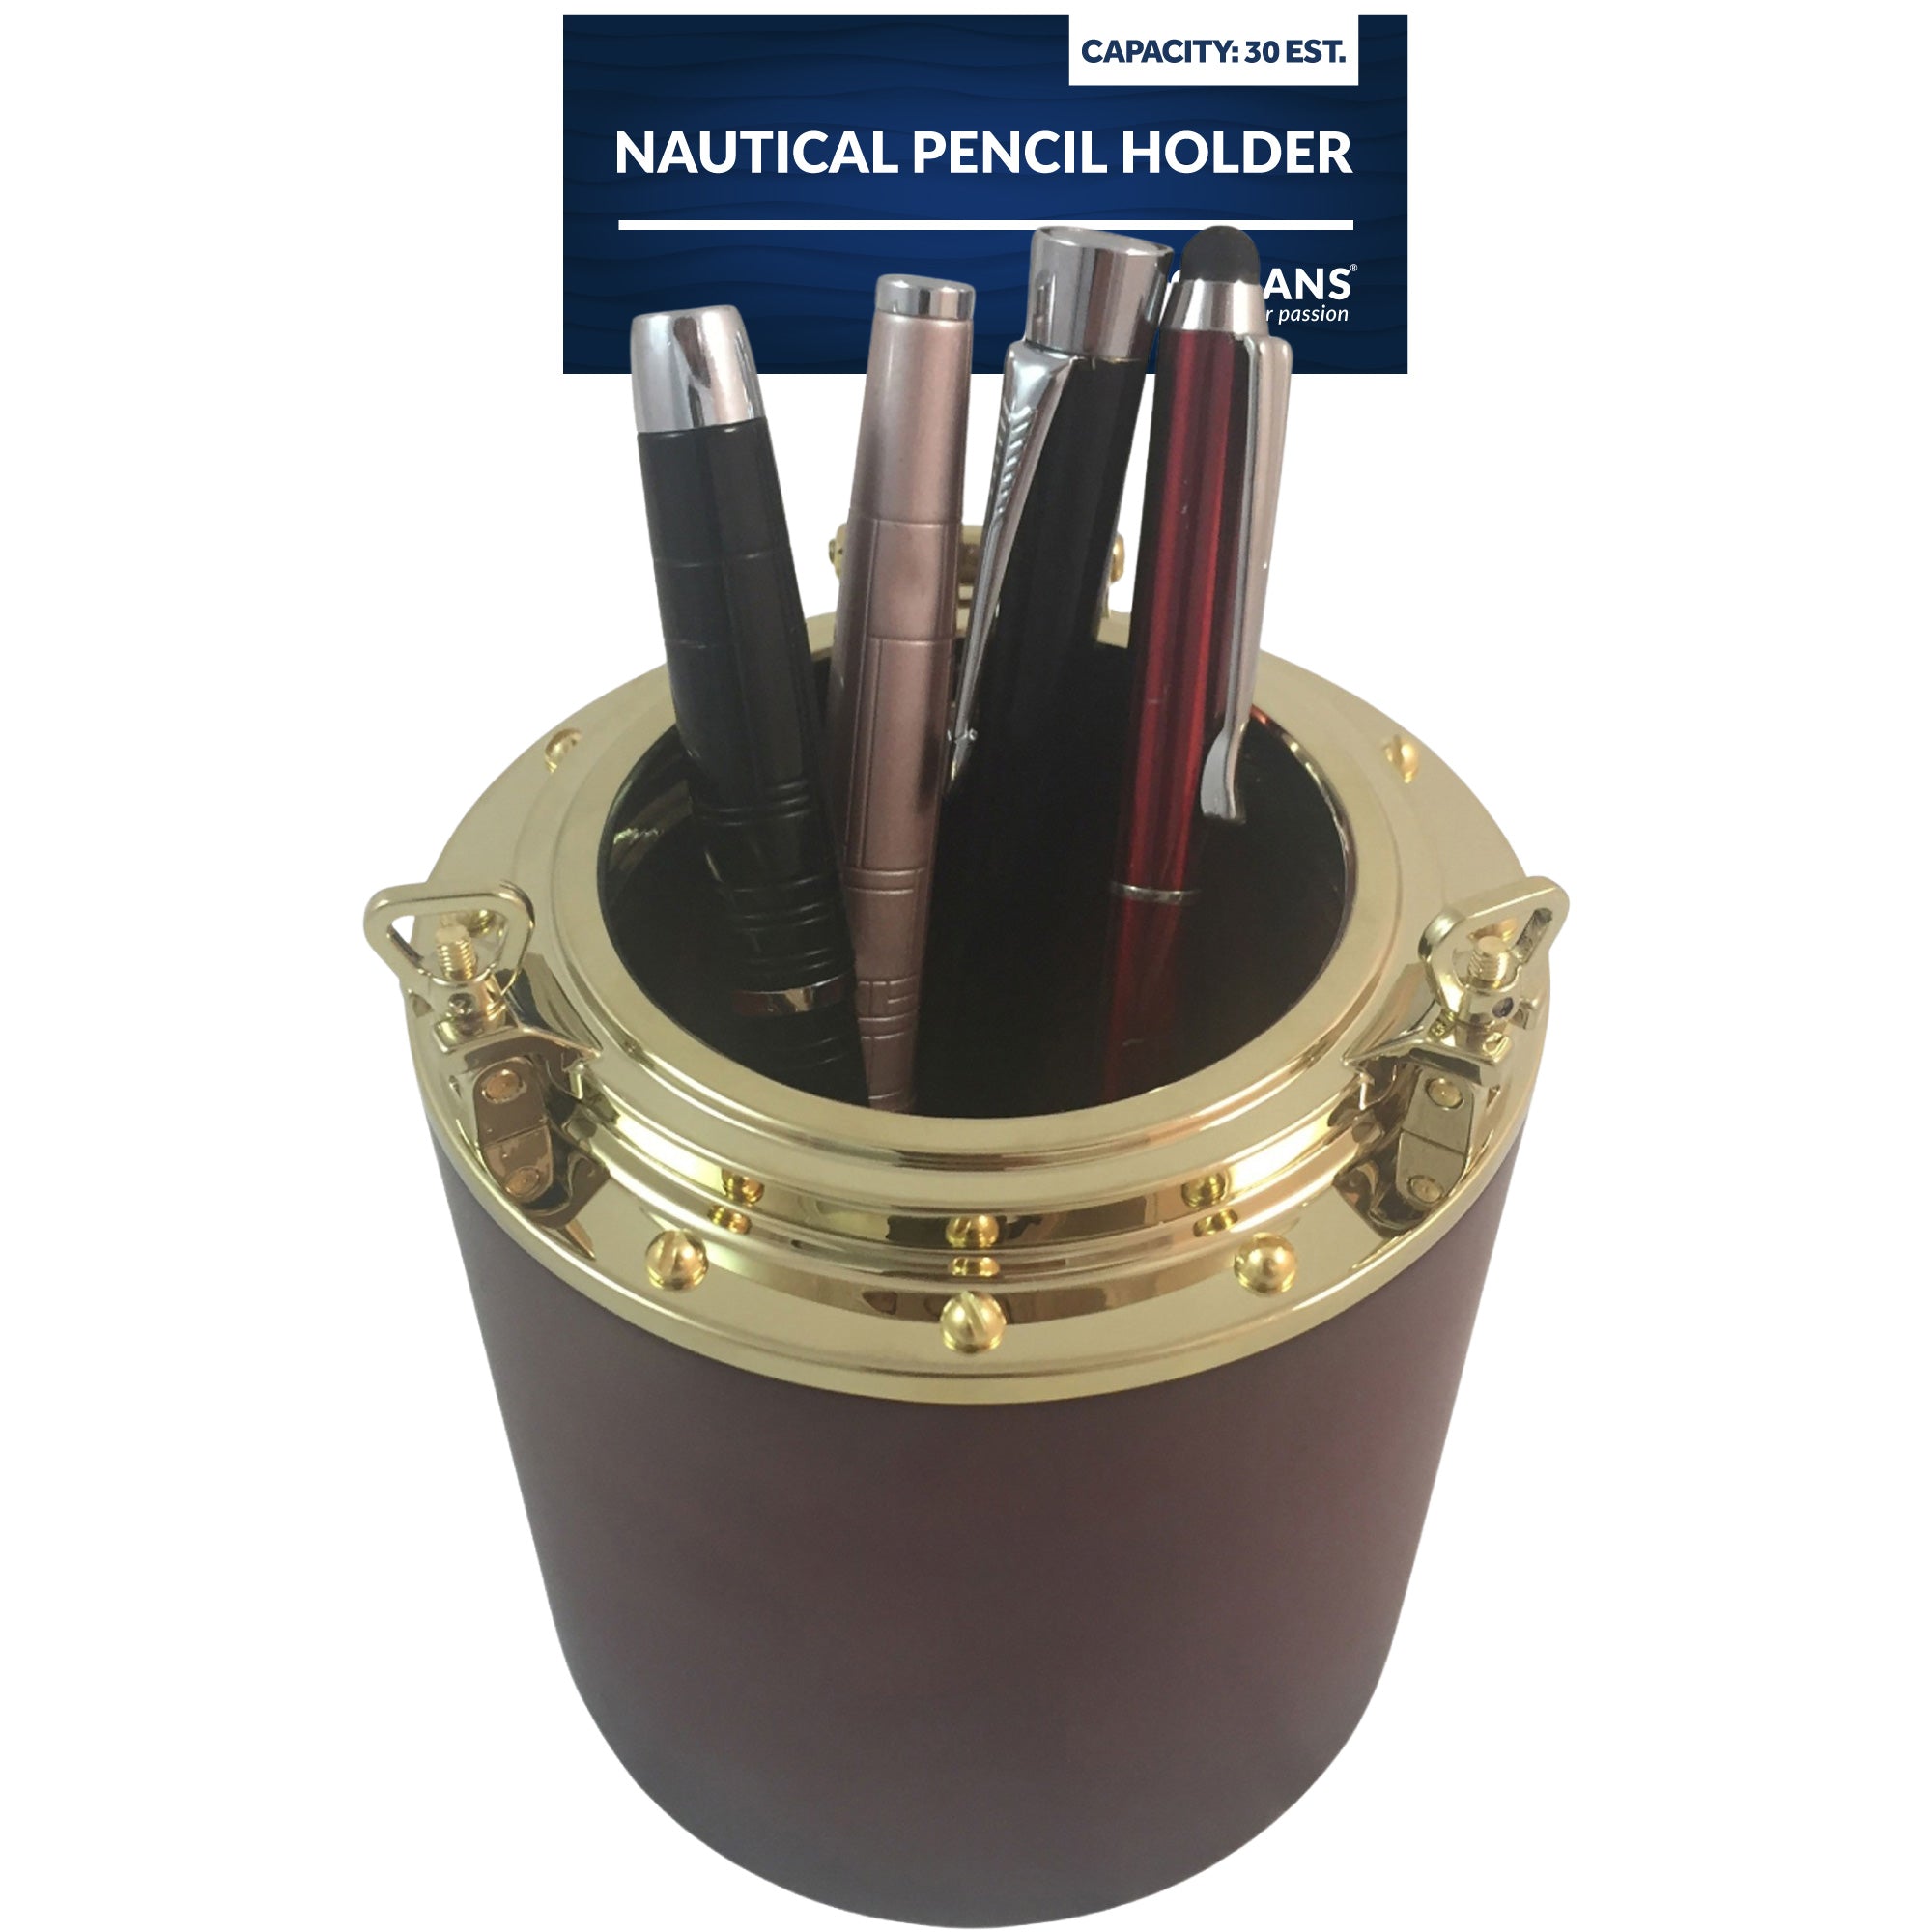 Nautical Pencil Holder - FO3978